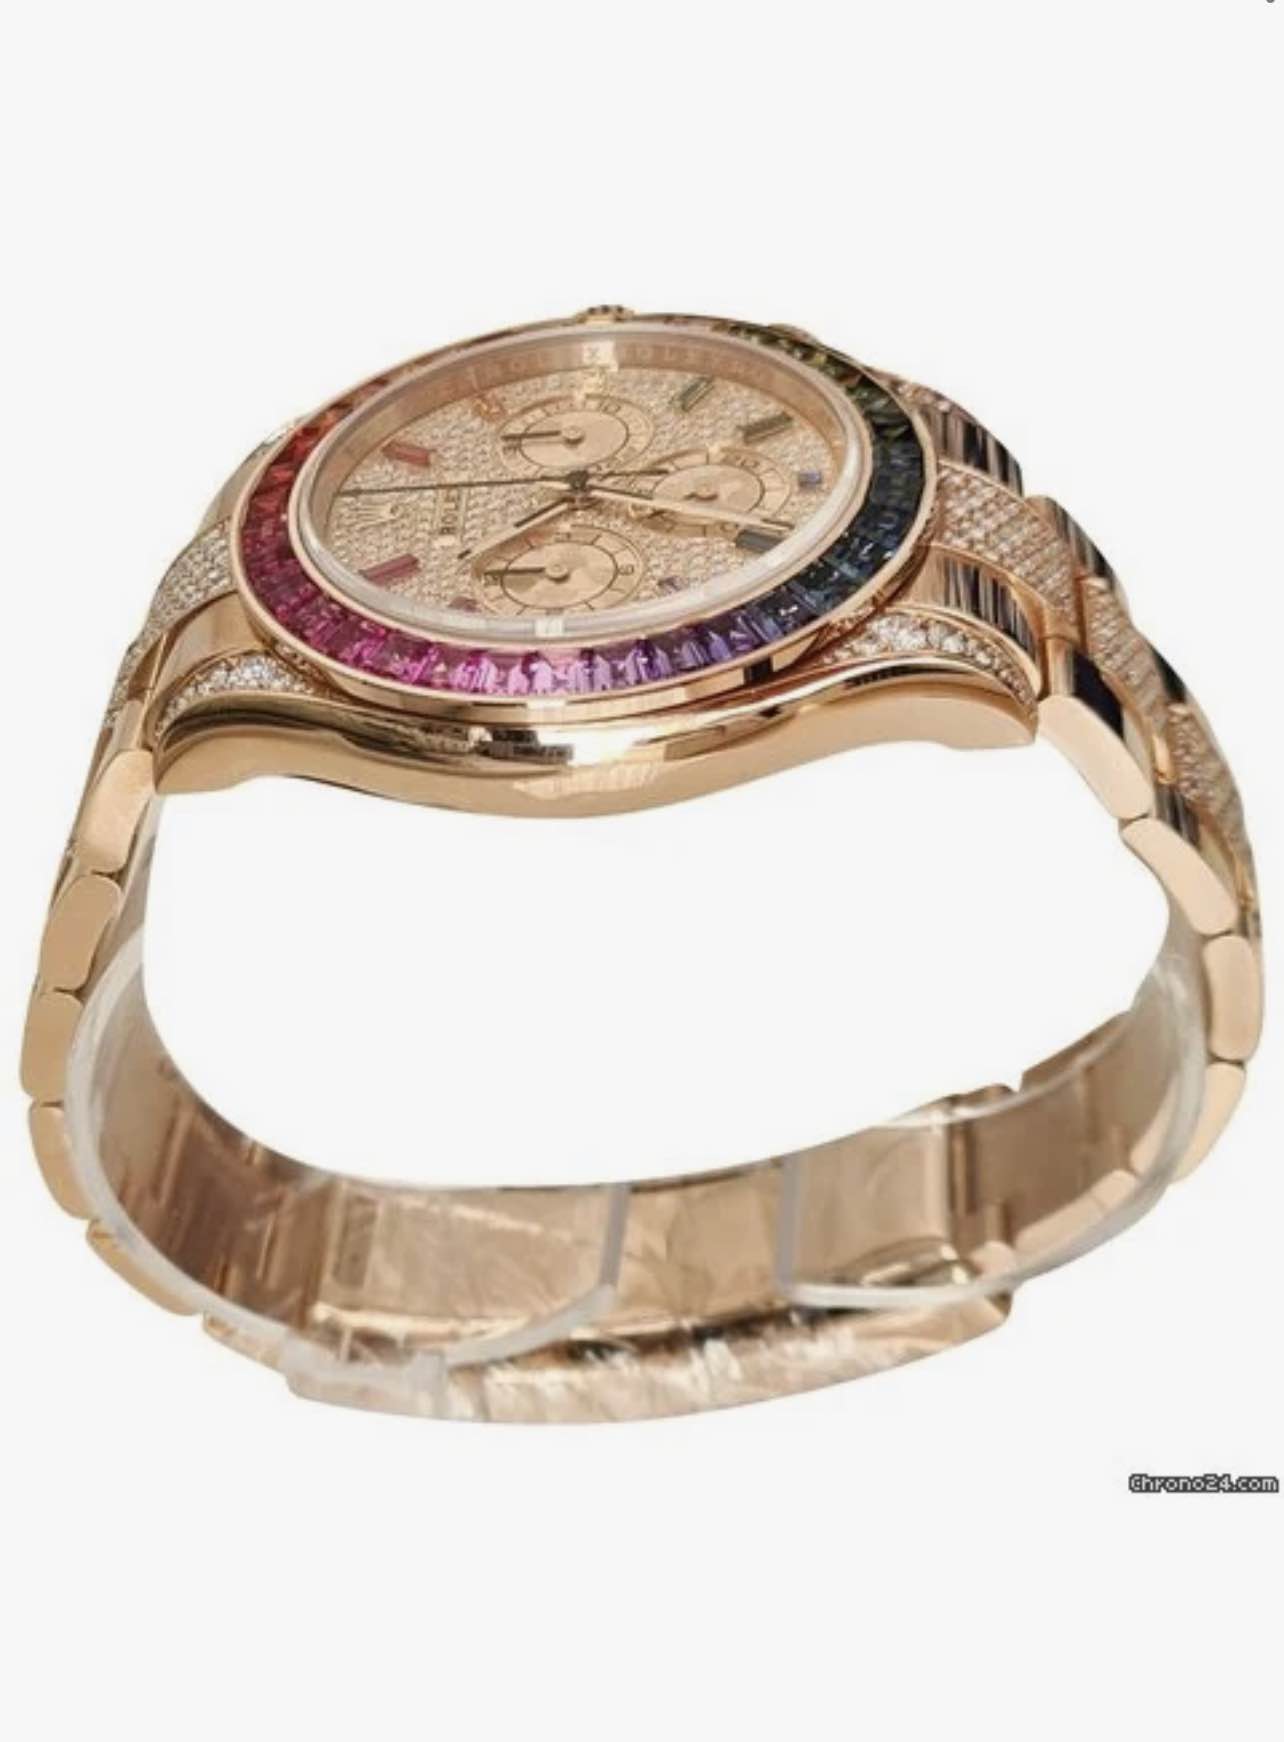 Rolex Daytona Watch - 3